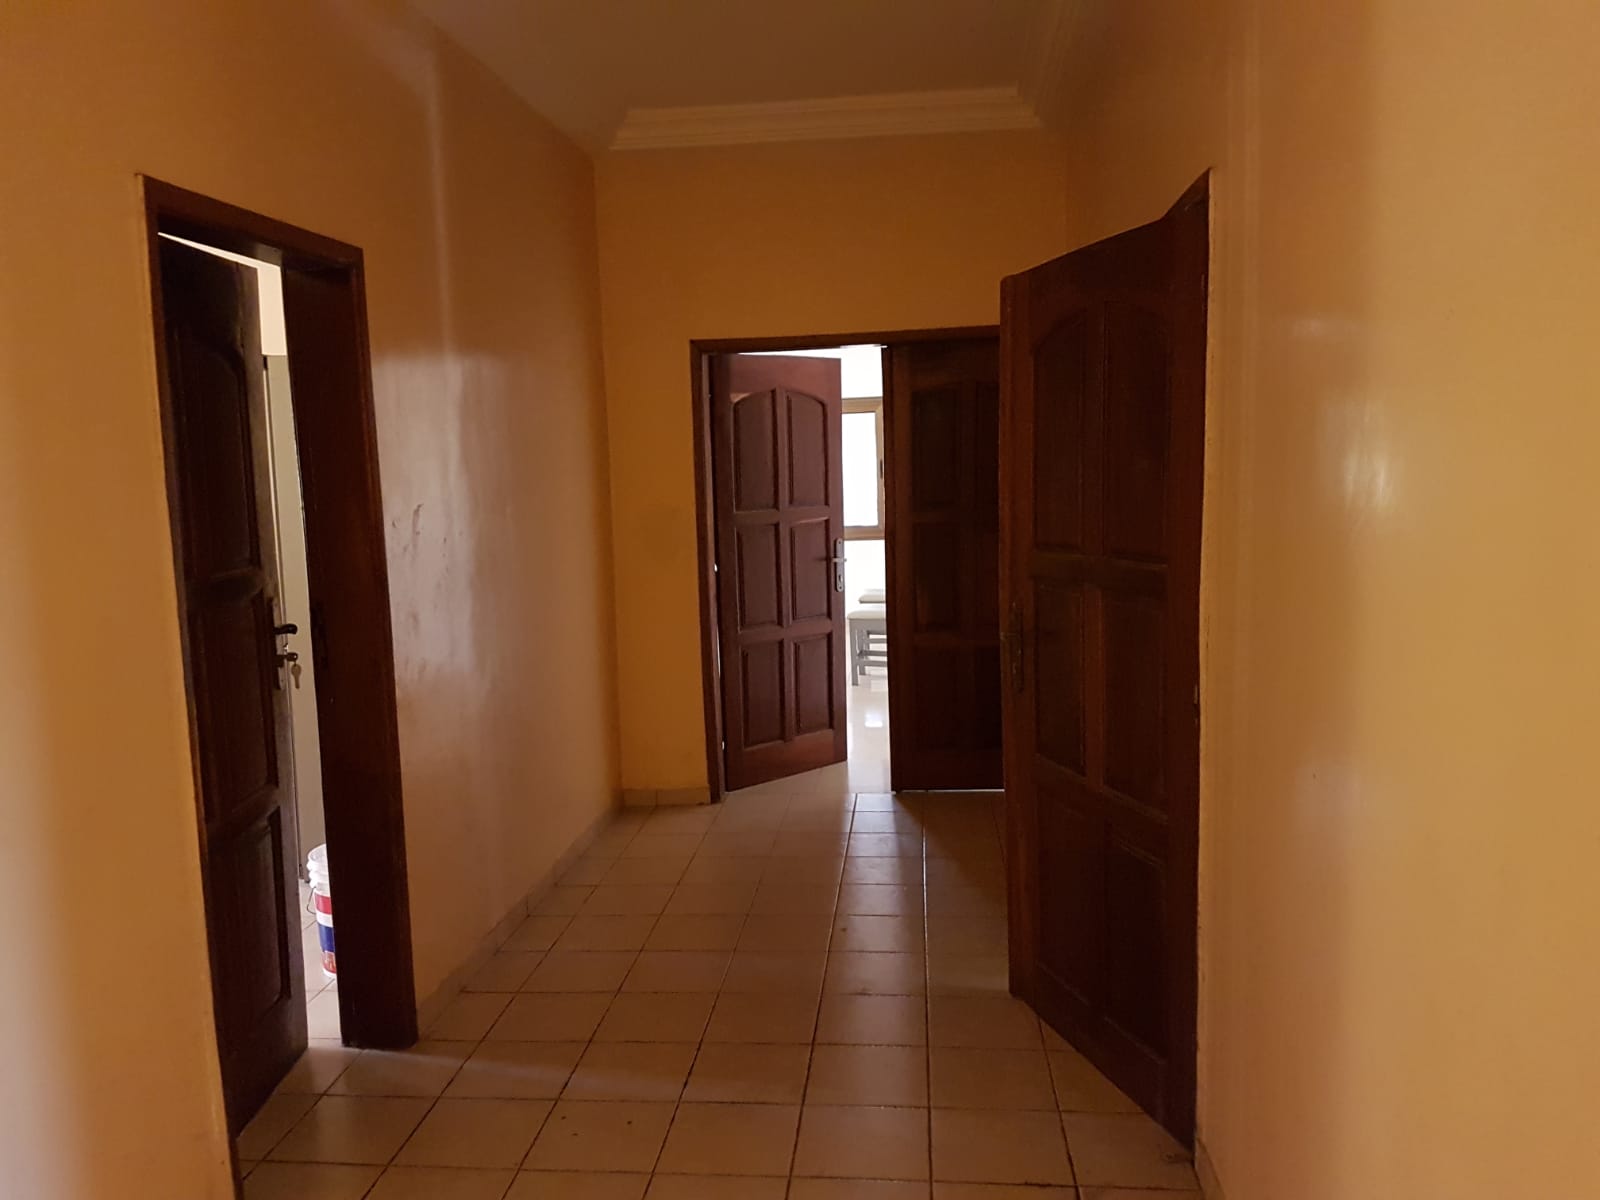 N° 4902 :
                            Appartement meublé à louer , Adidogome, Lome, Togo : 400 000 XOF/mois